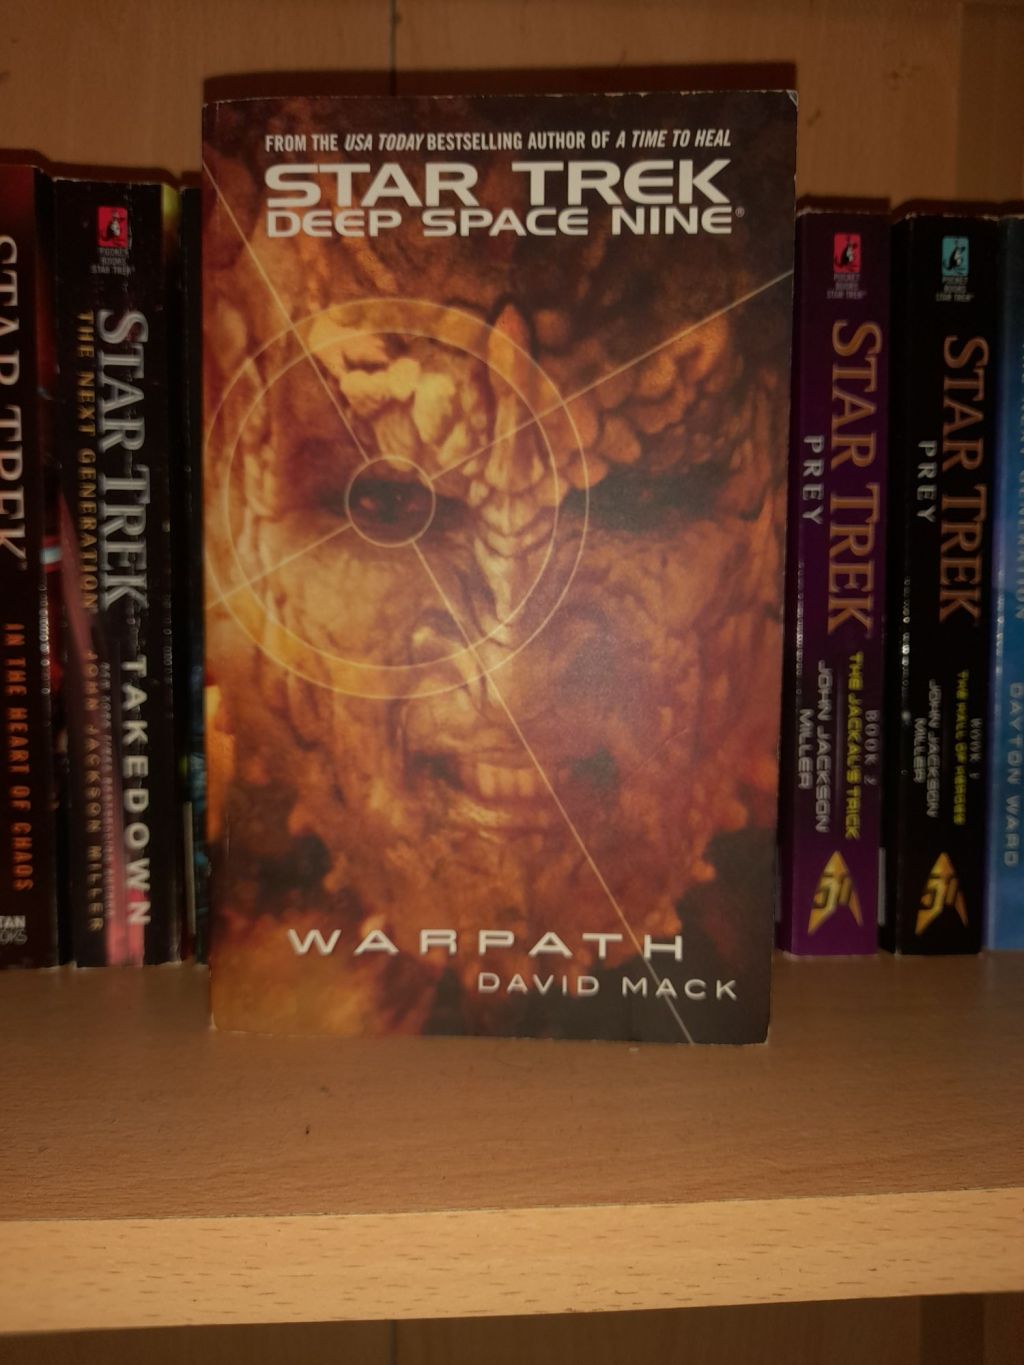 BOOK REVIEW: Warpath, by David Mack